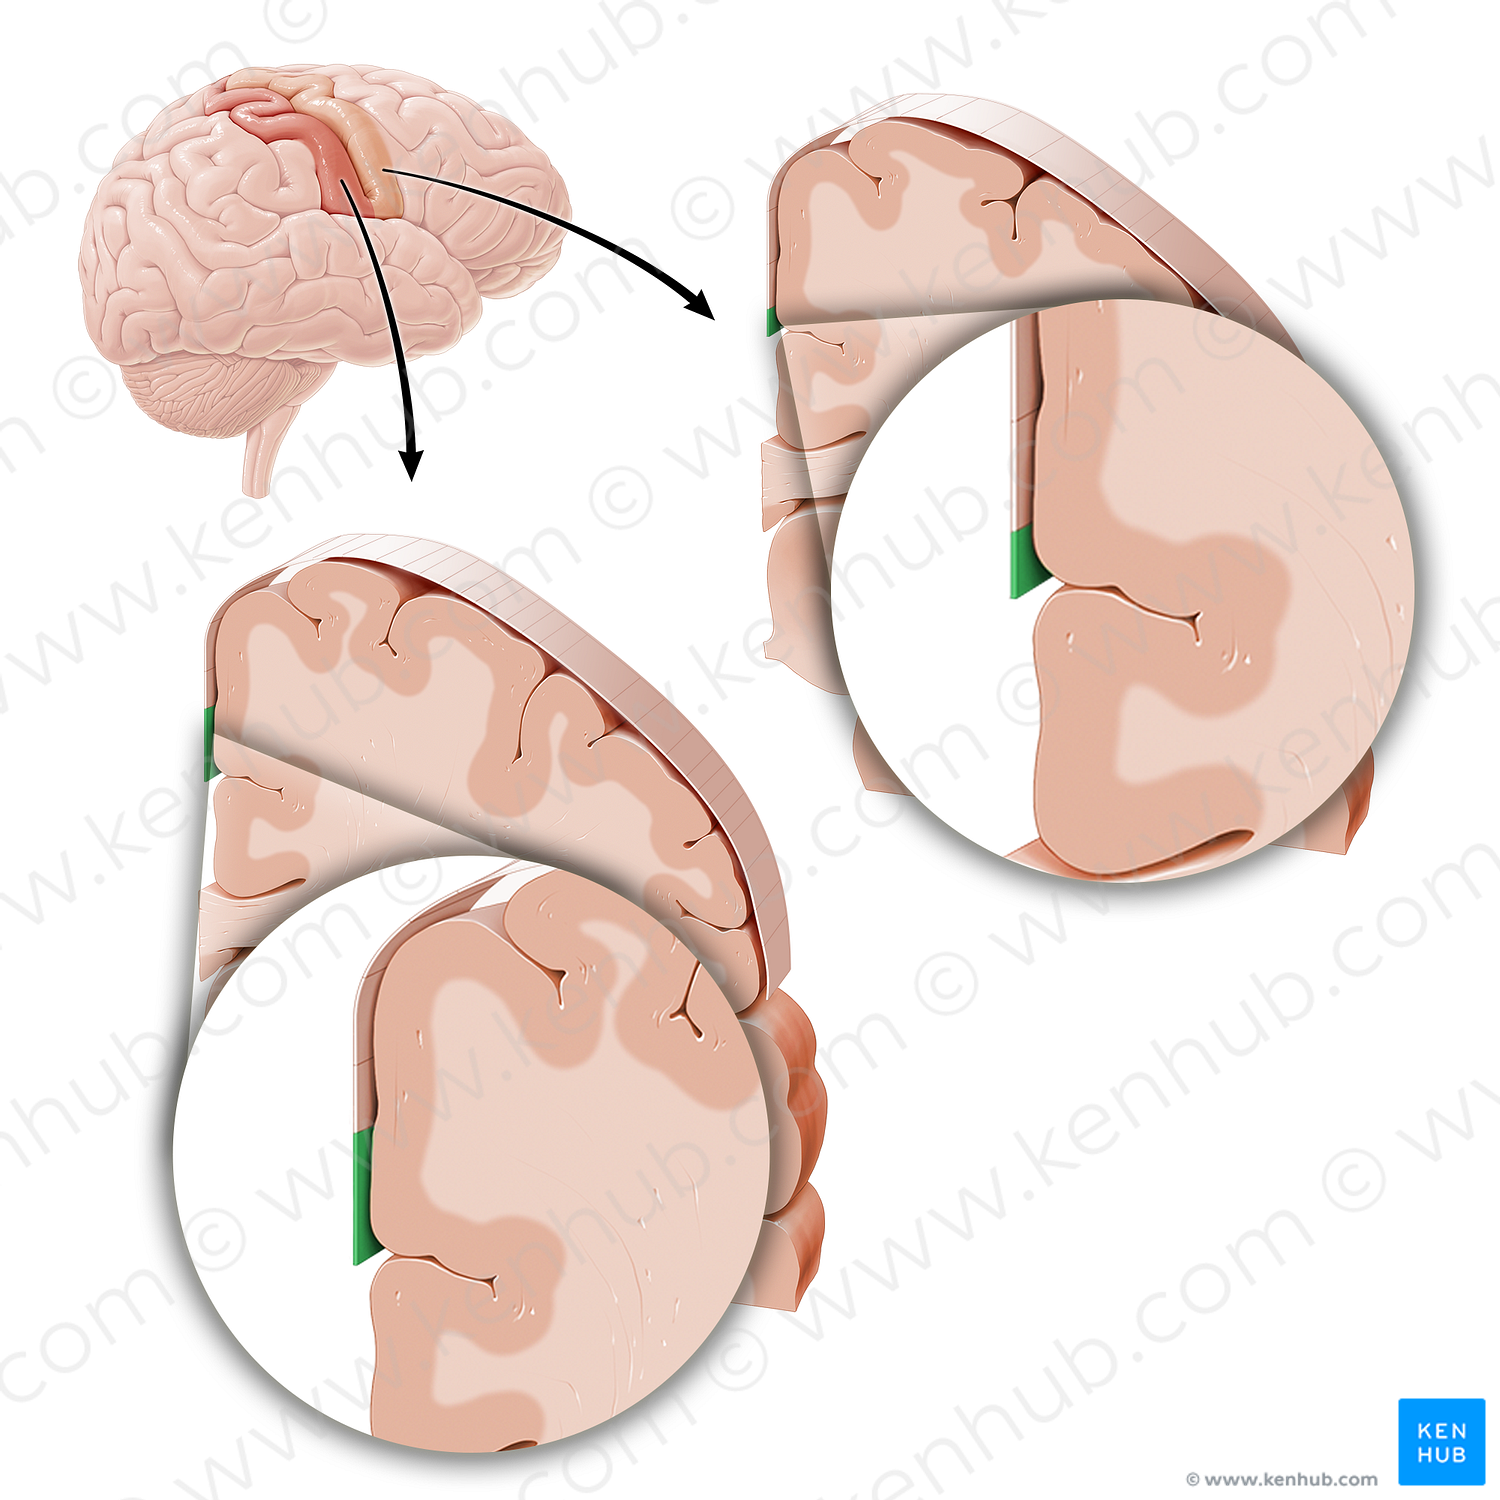 Sensory and motor cortex of genitals (#21219)